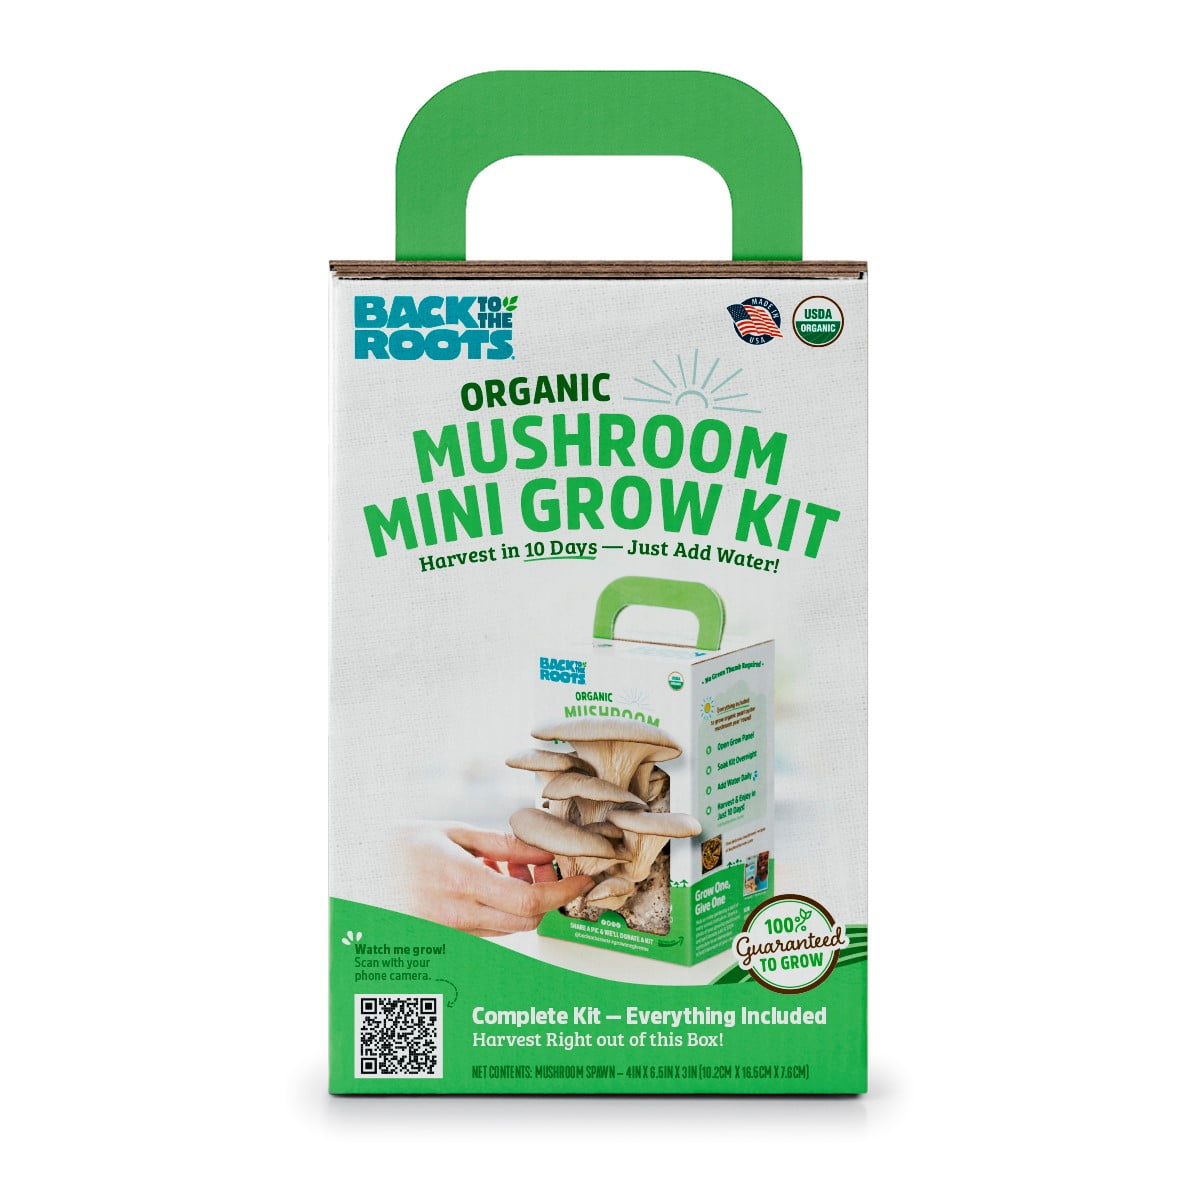 Root Mushroom Farm-Oyster Mushroom Growing Kit- Two 3-pound growing Kits 